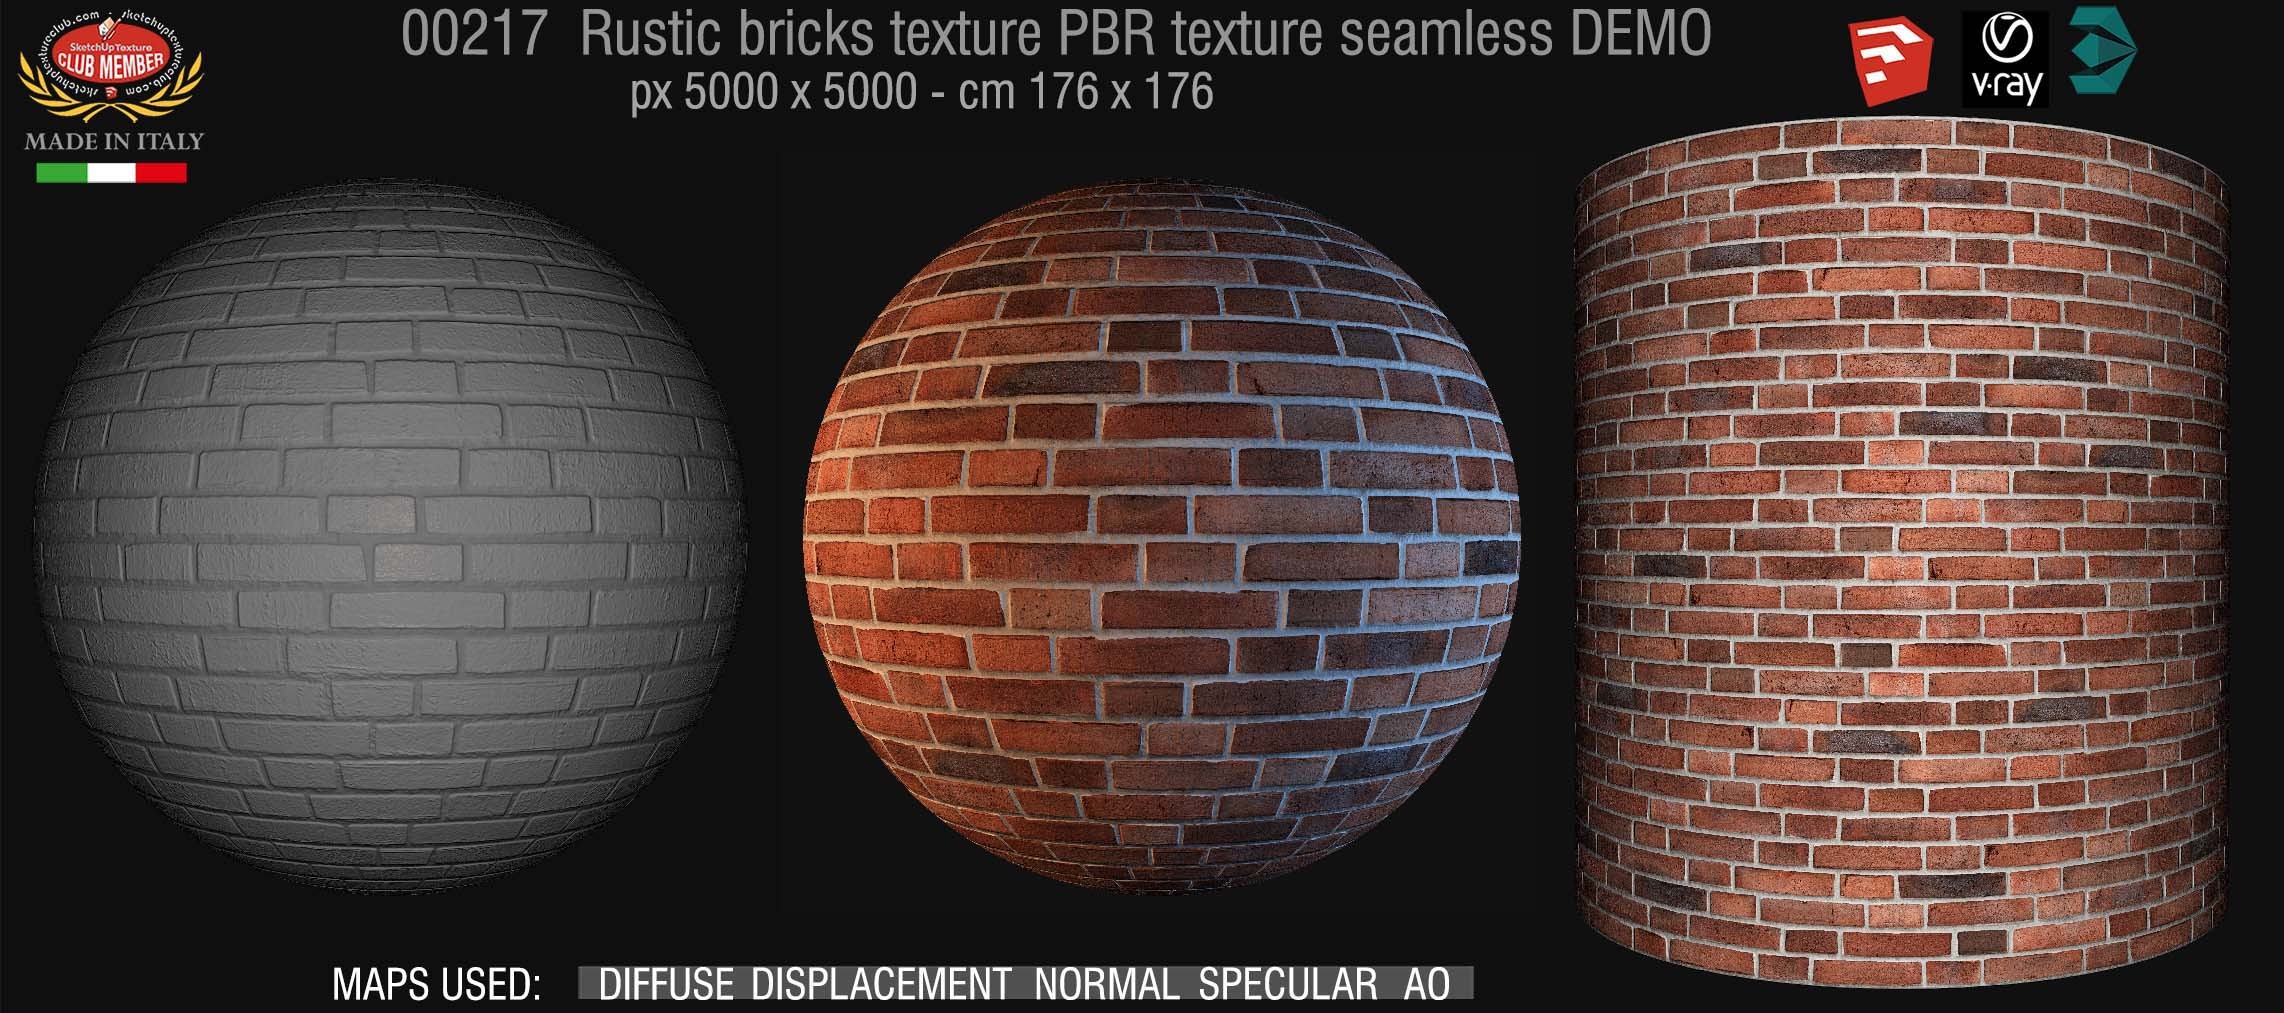 00217 rustic bricks PBR texture seamless DEMO